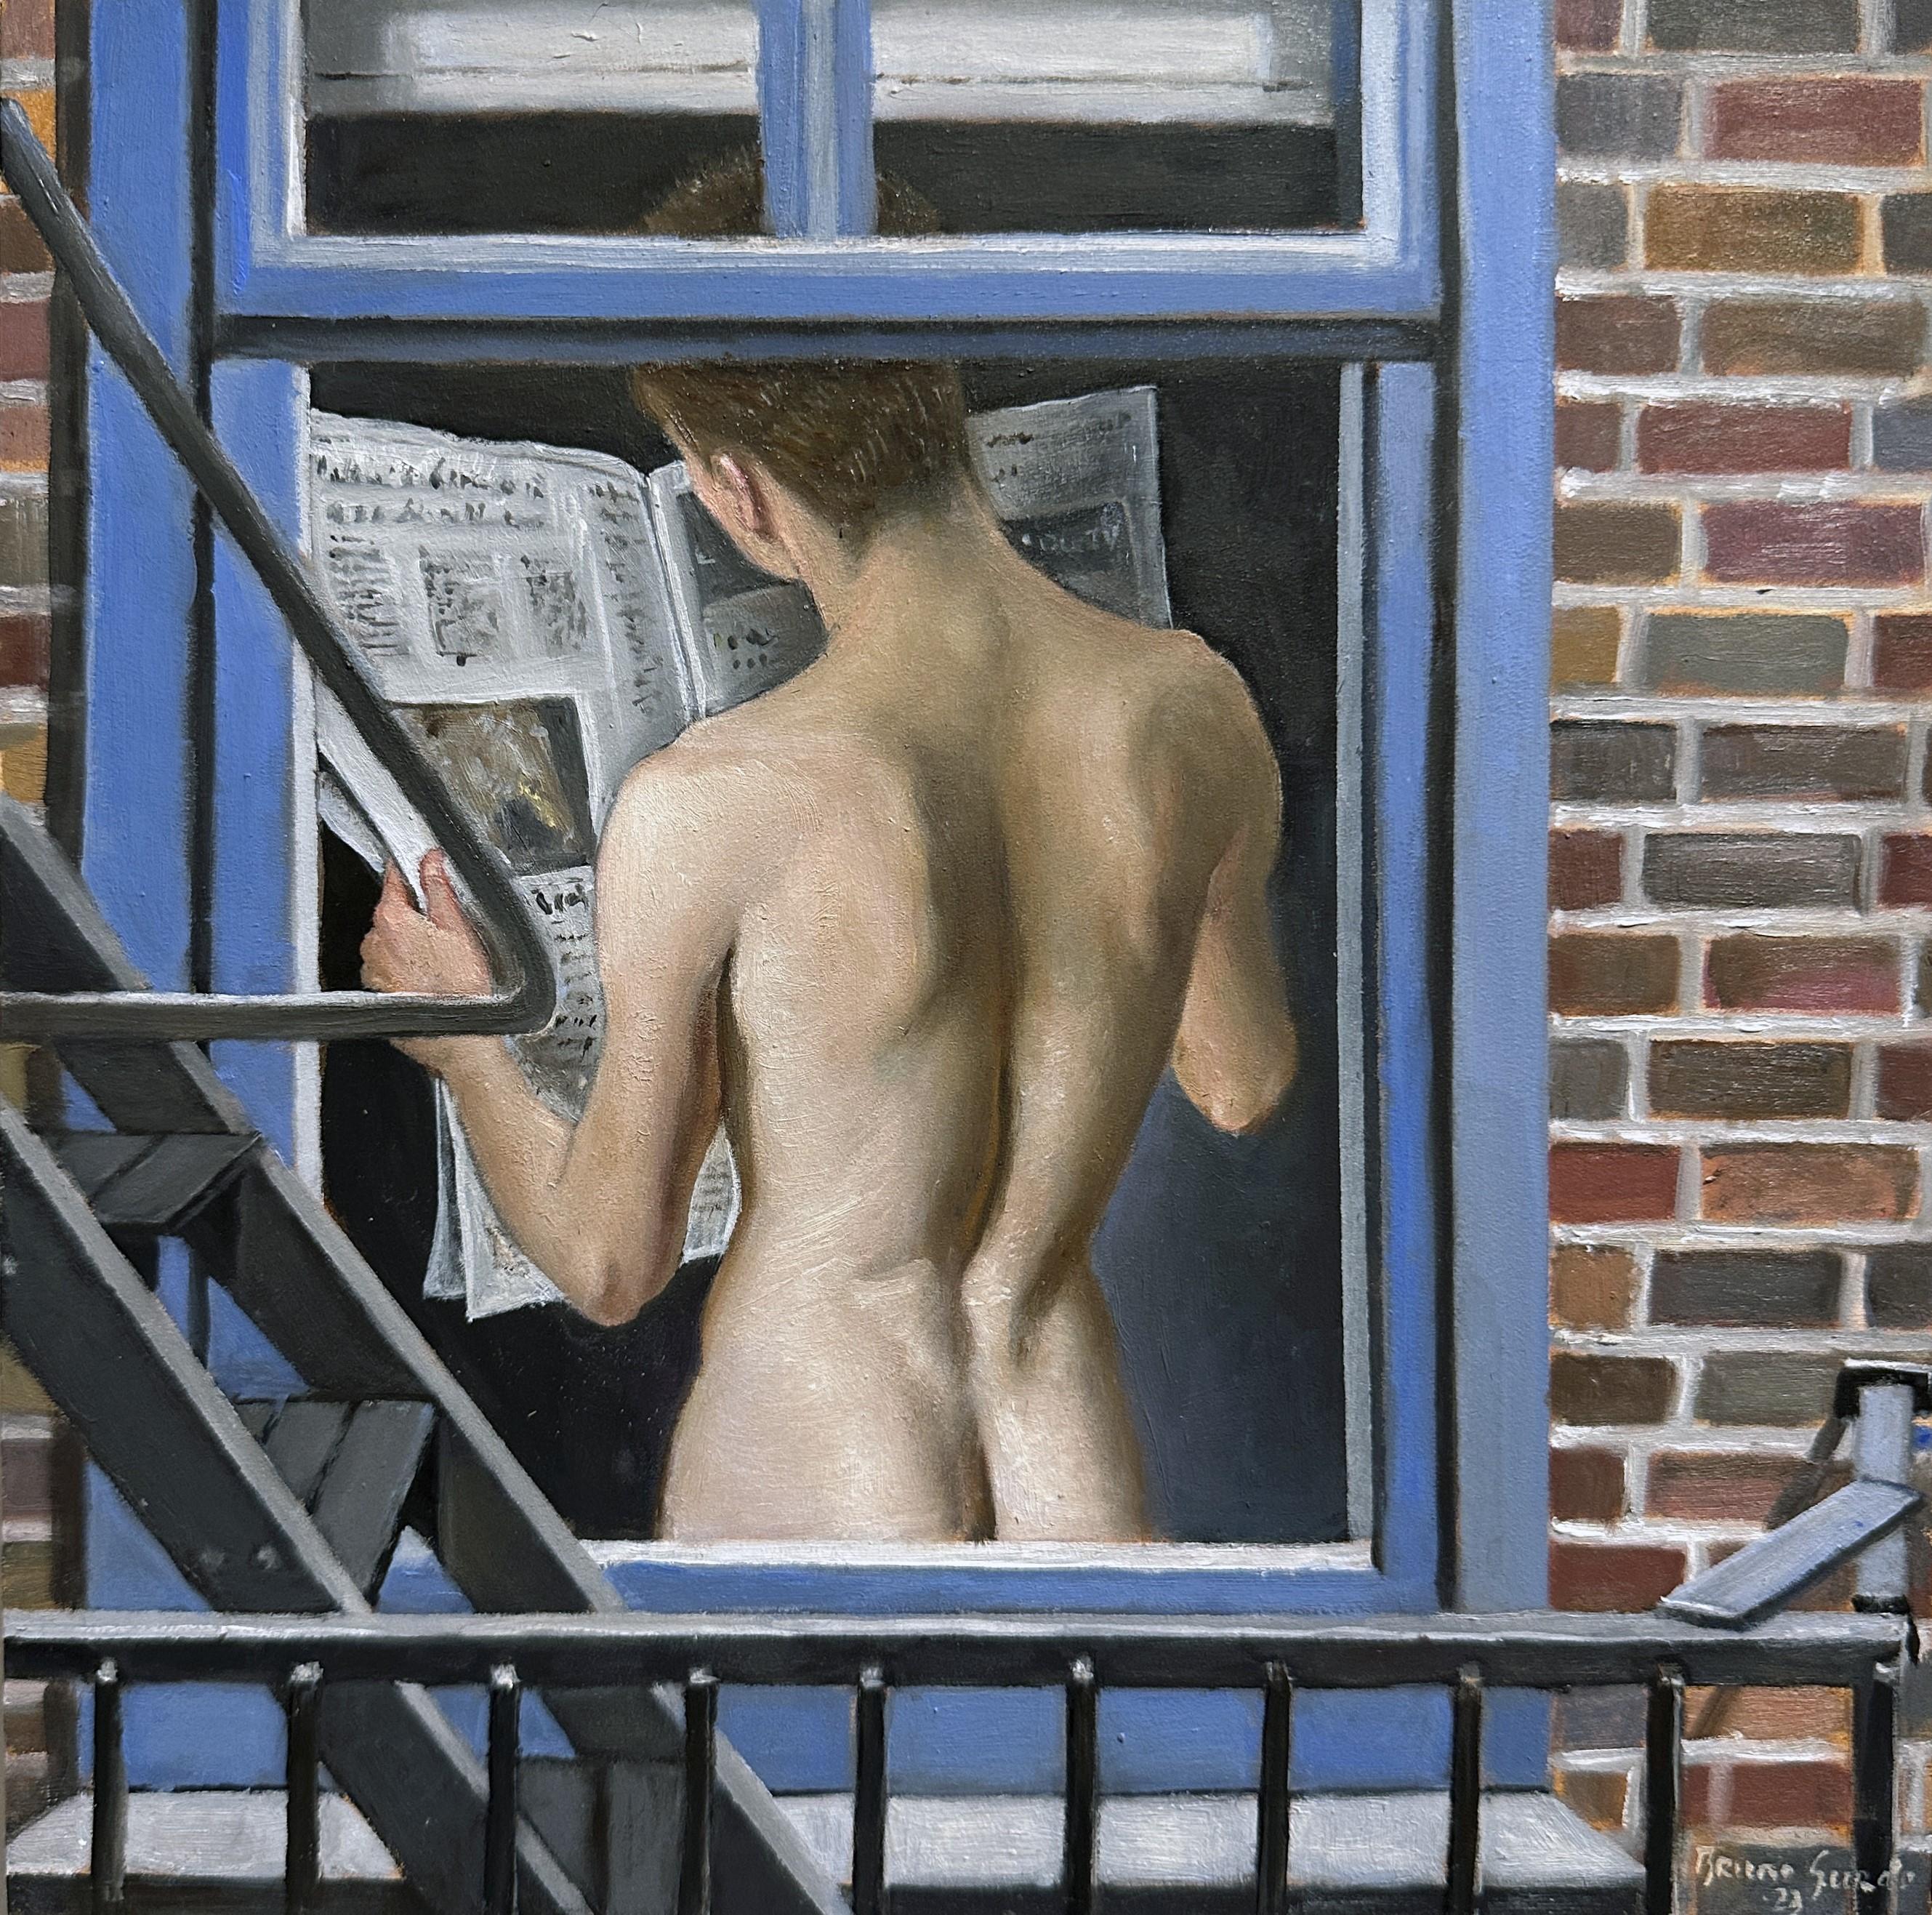 Morning News - Voyeuristic View of Nude männlicher Torso Through the Fire Escape 